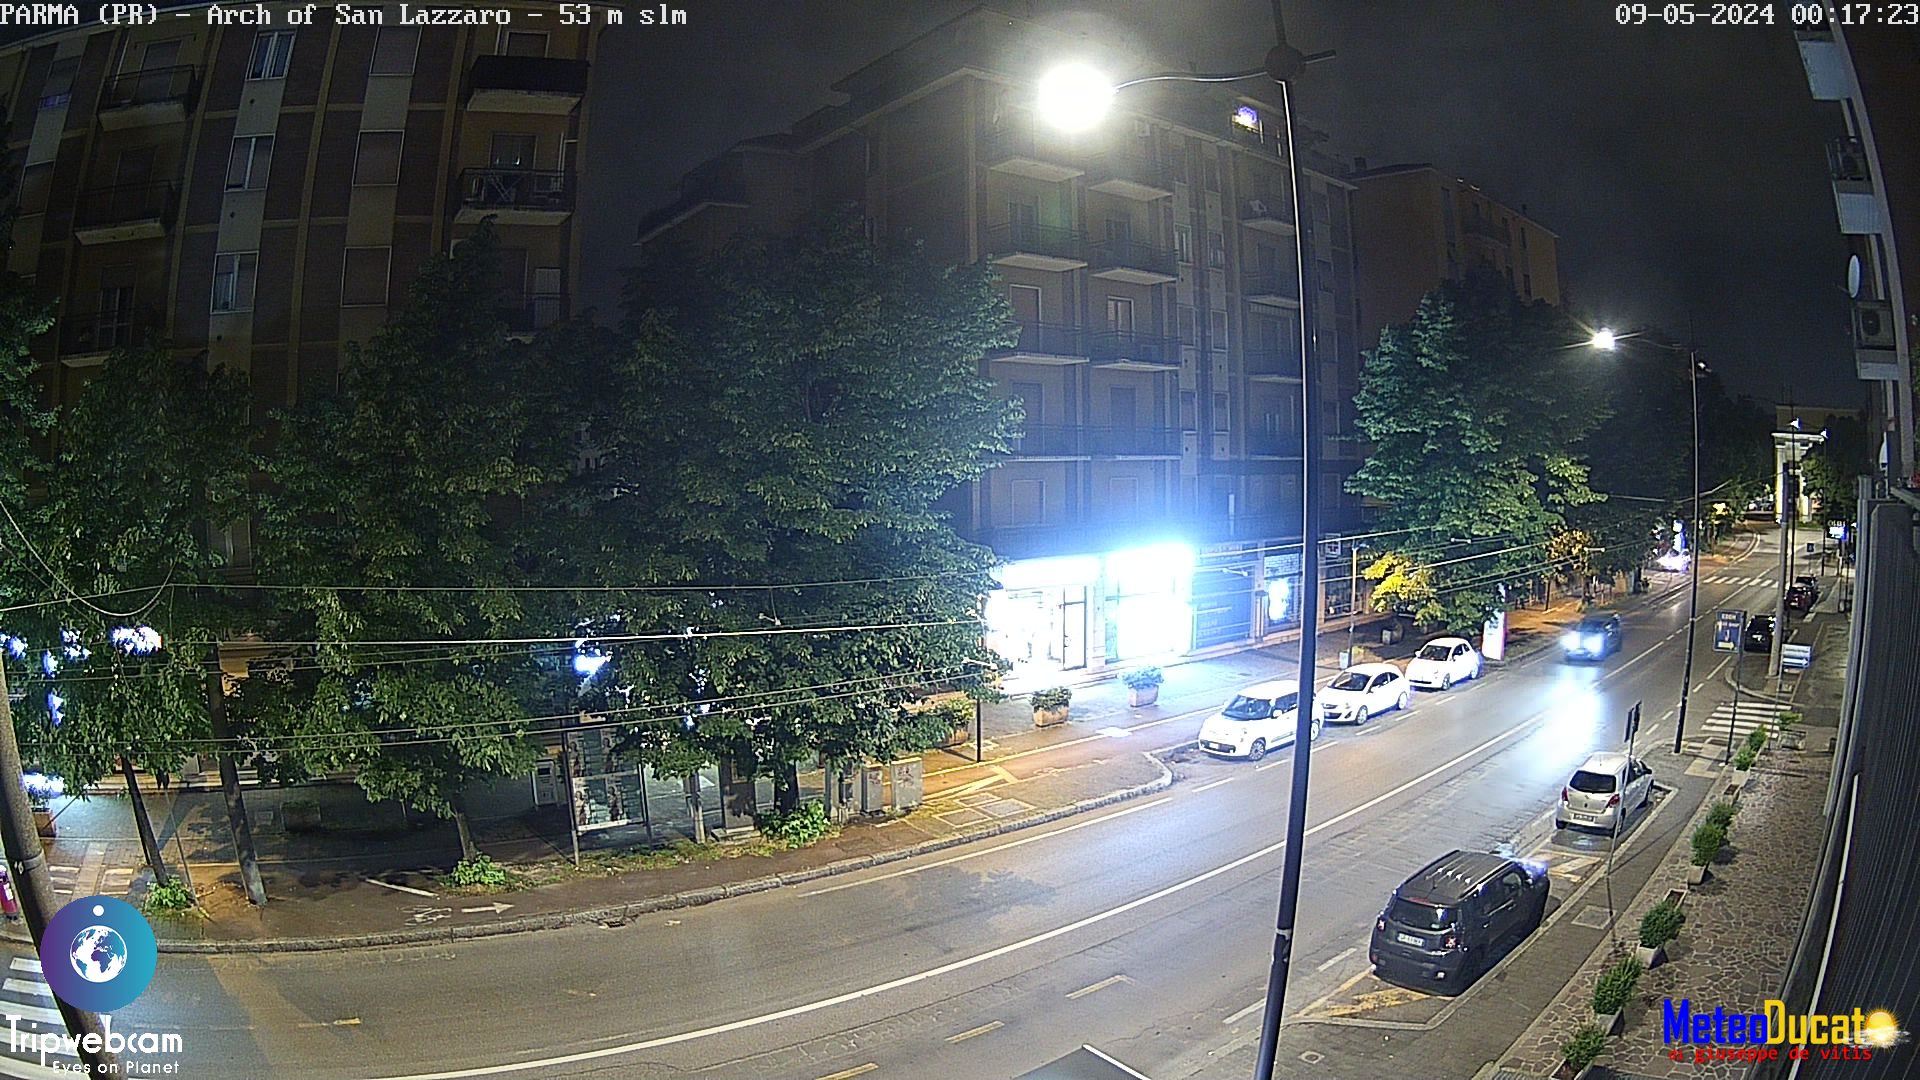 Webcam nei dintorni di parma in Emilia Romagna